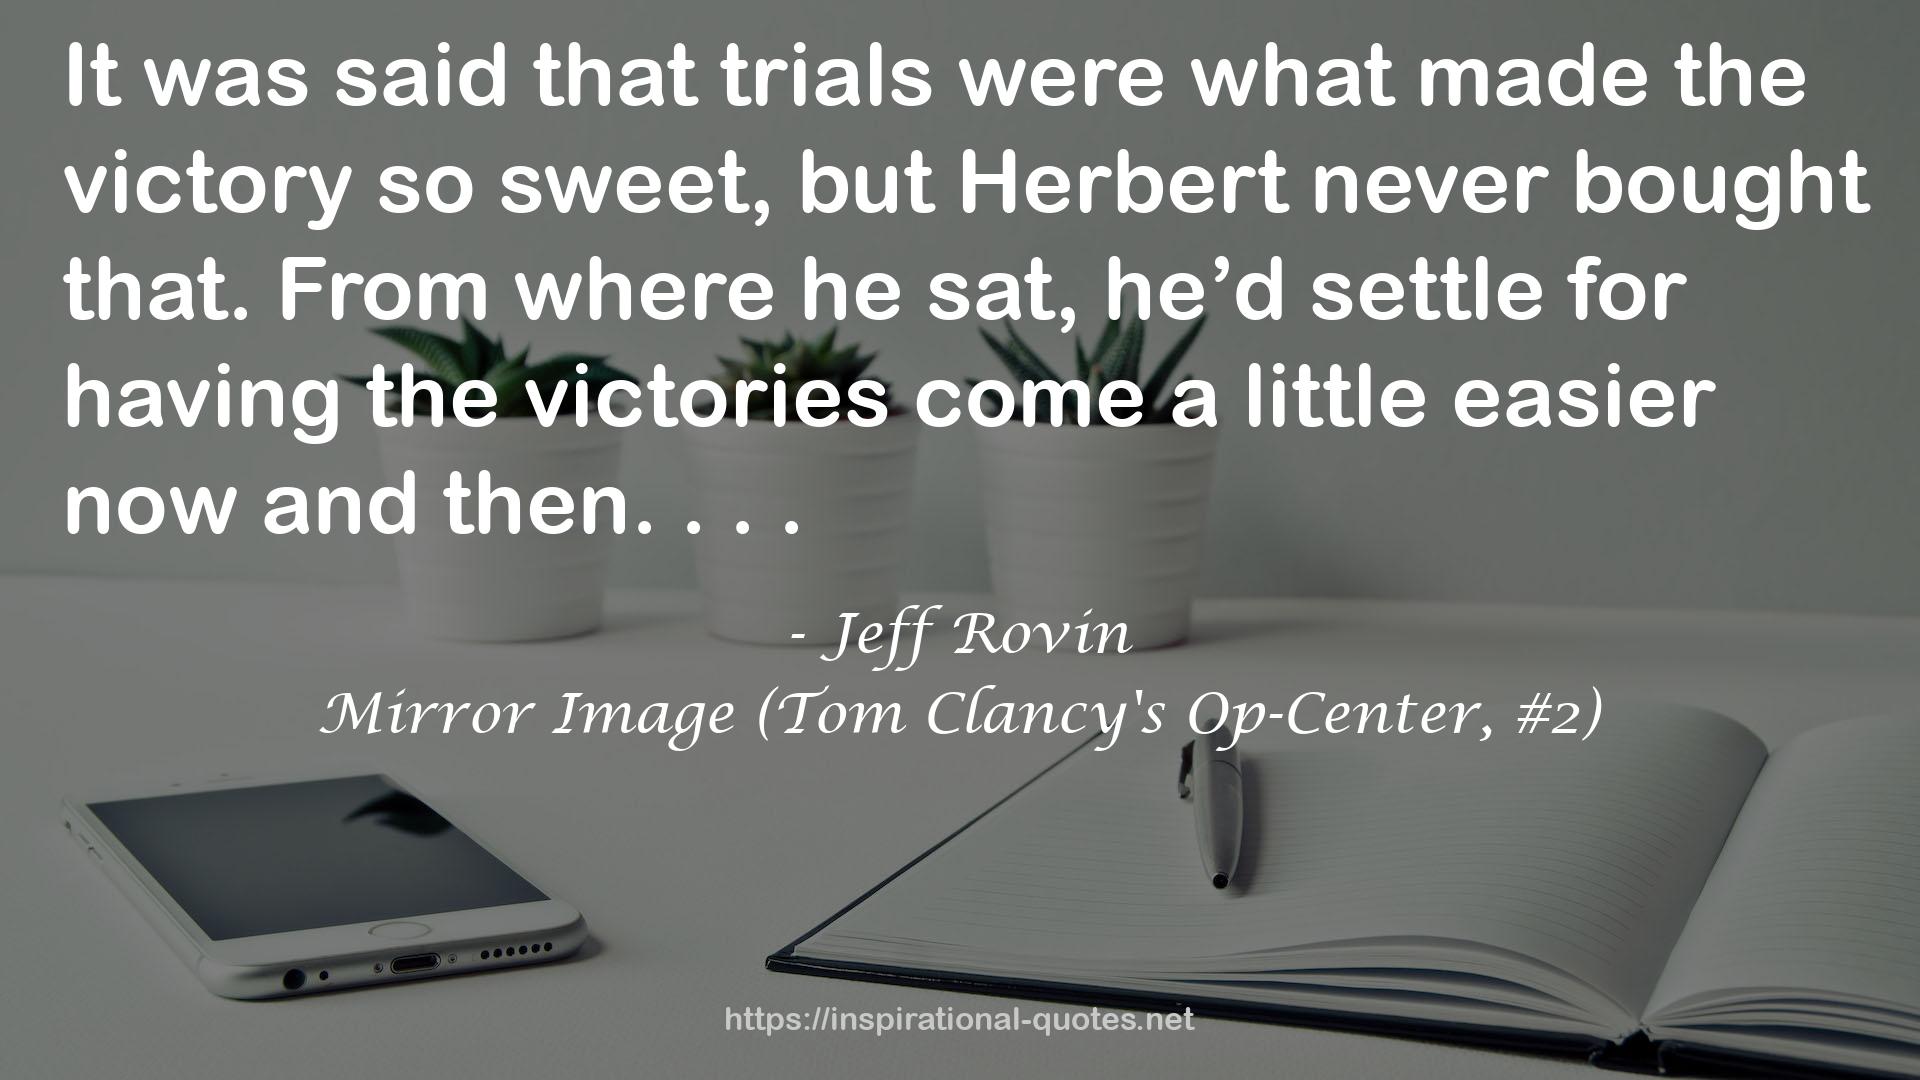 Mirror Image (Tom Clancy's Op-Center, #2) QUOTES